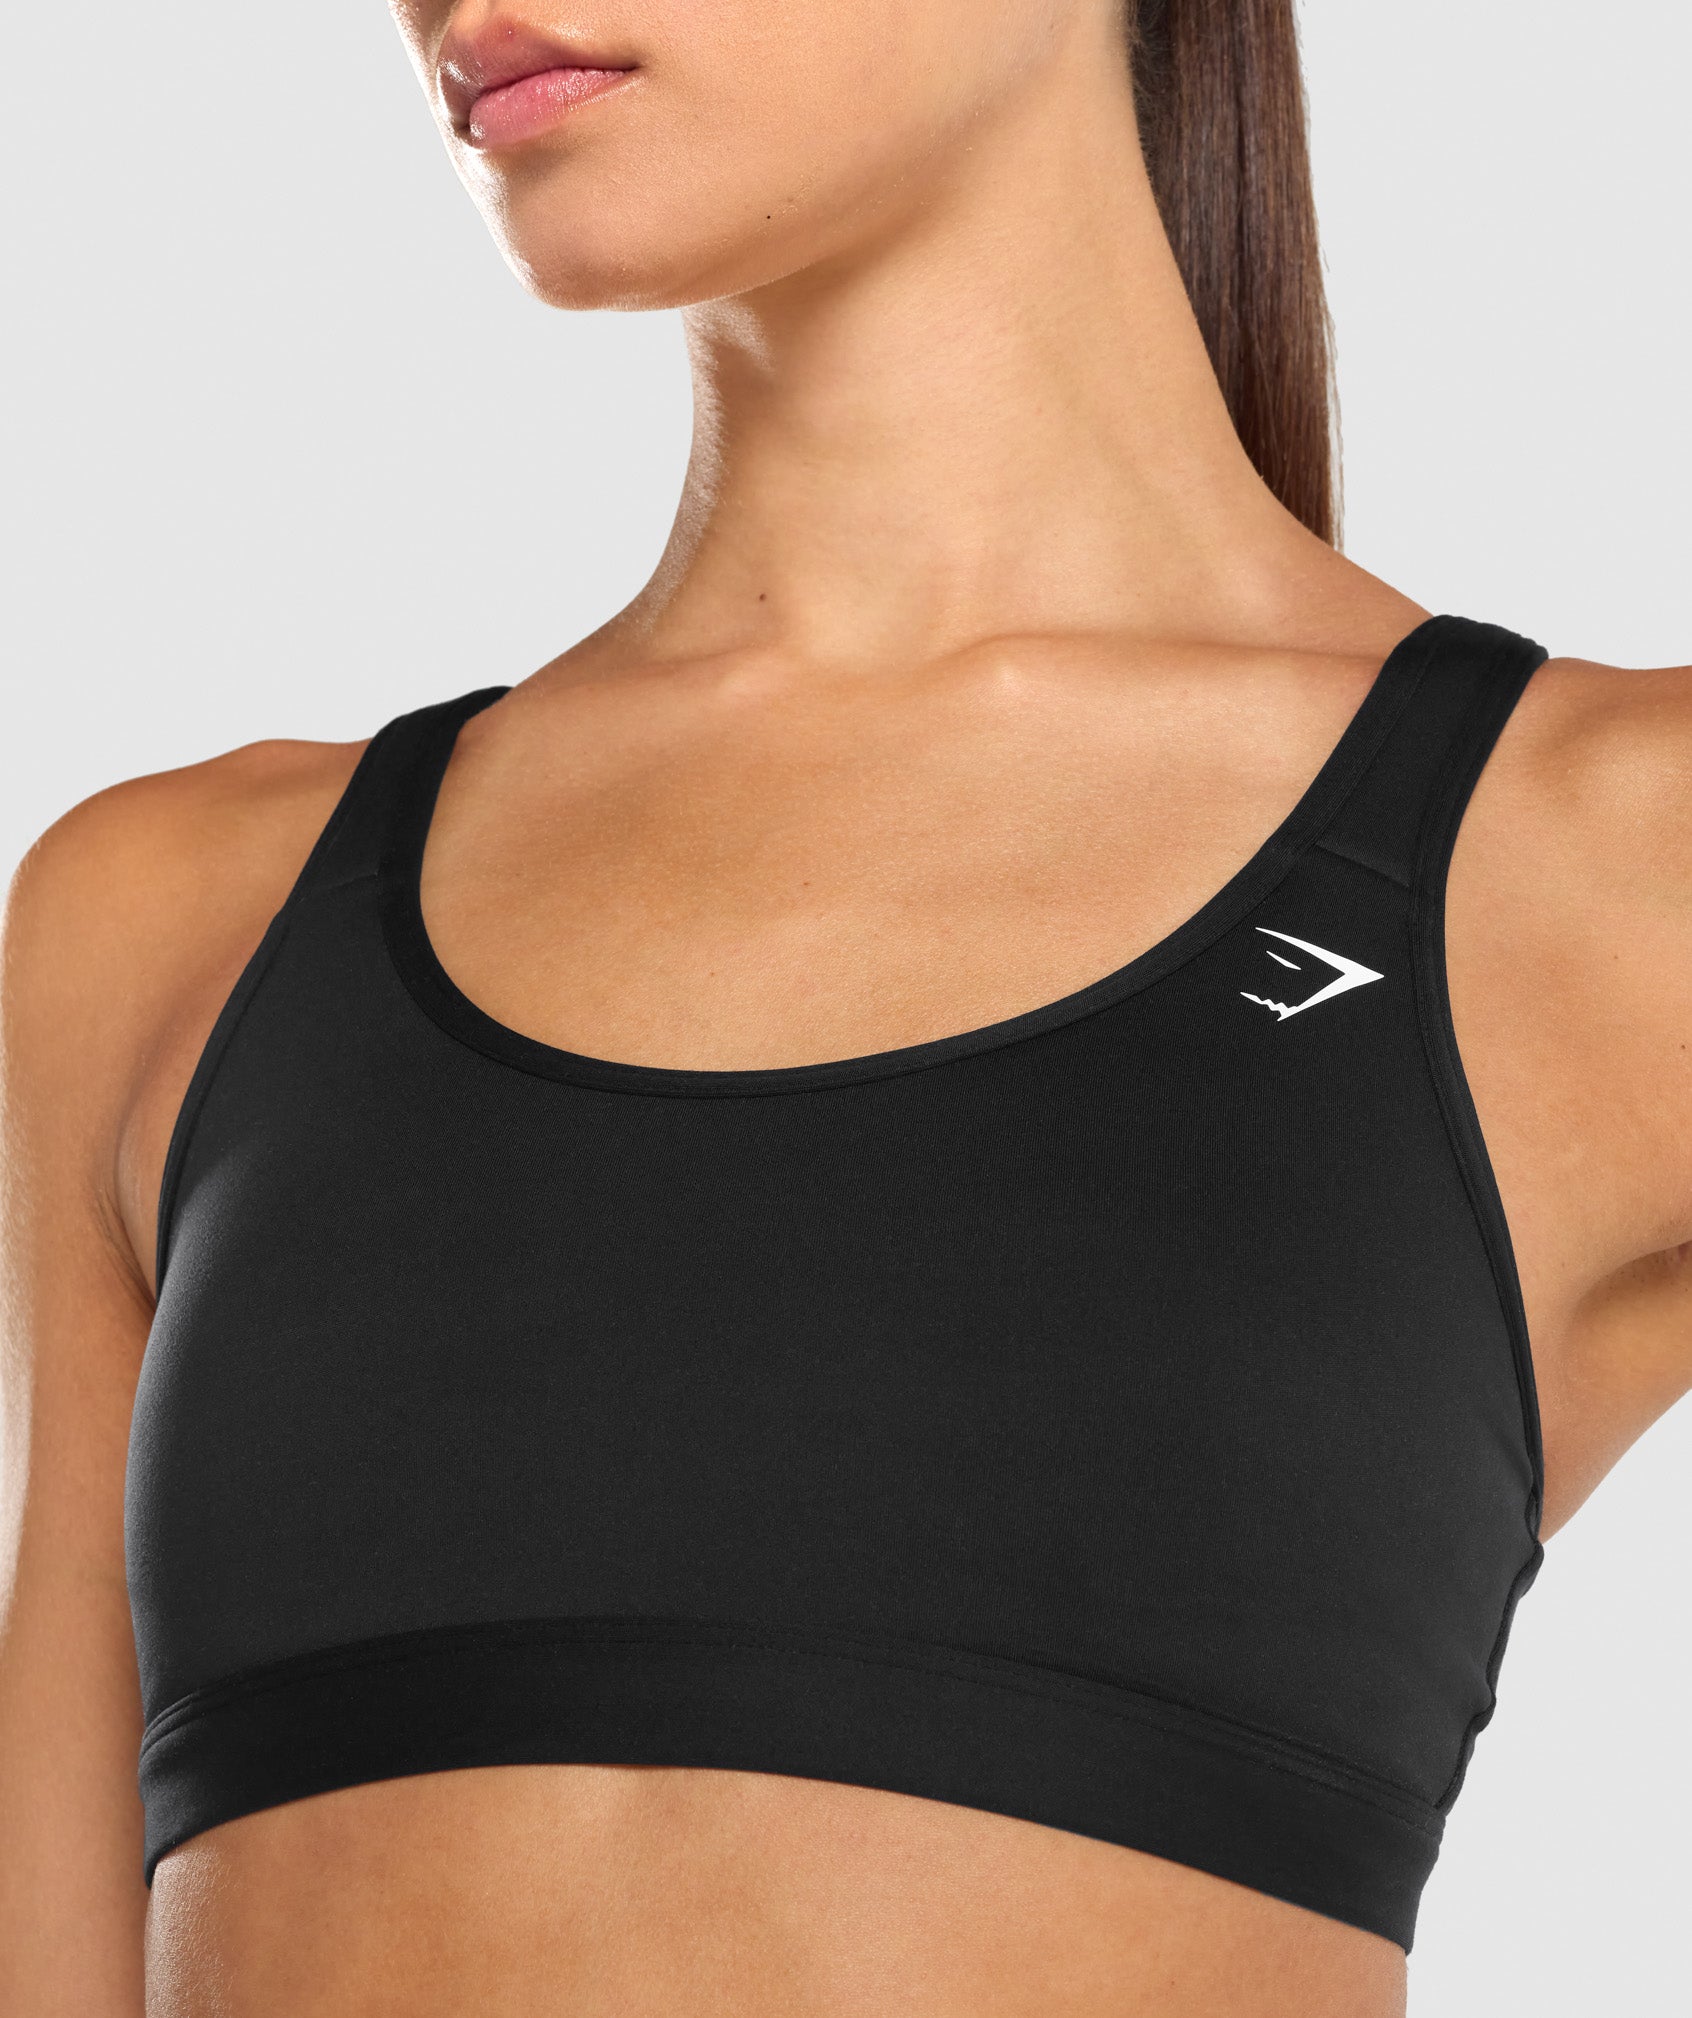 womens Black sports bra Medium degress scoop neck workout gym